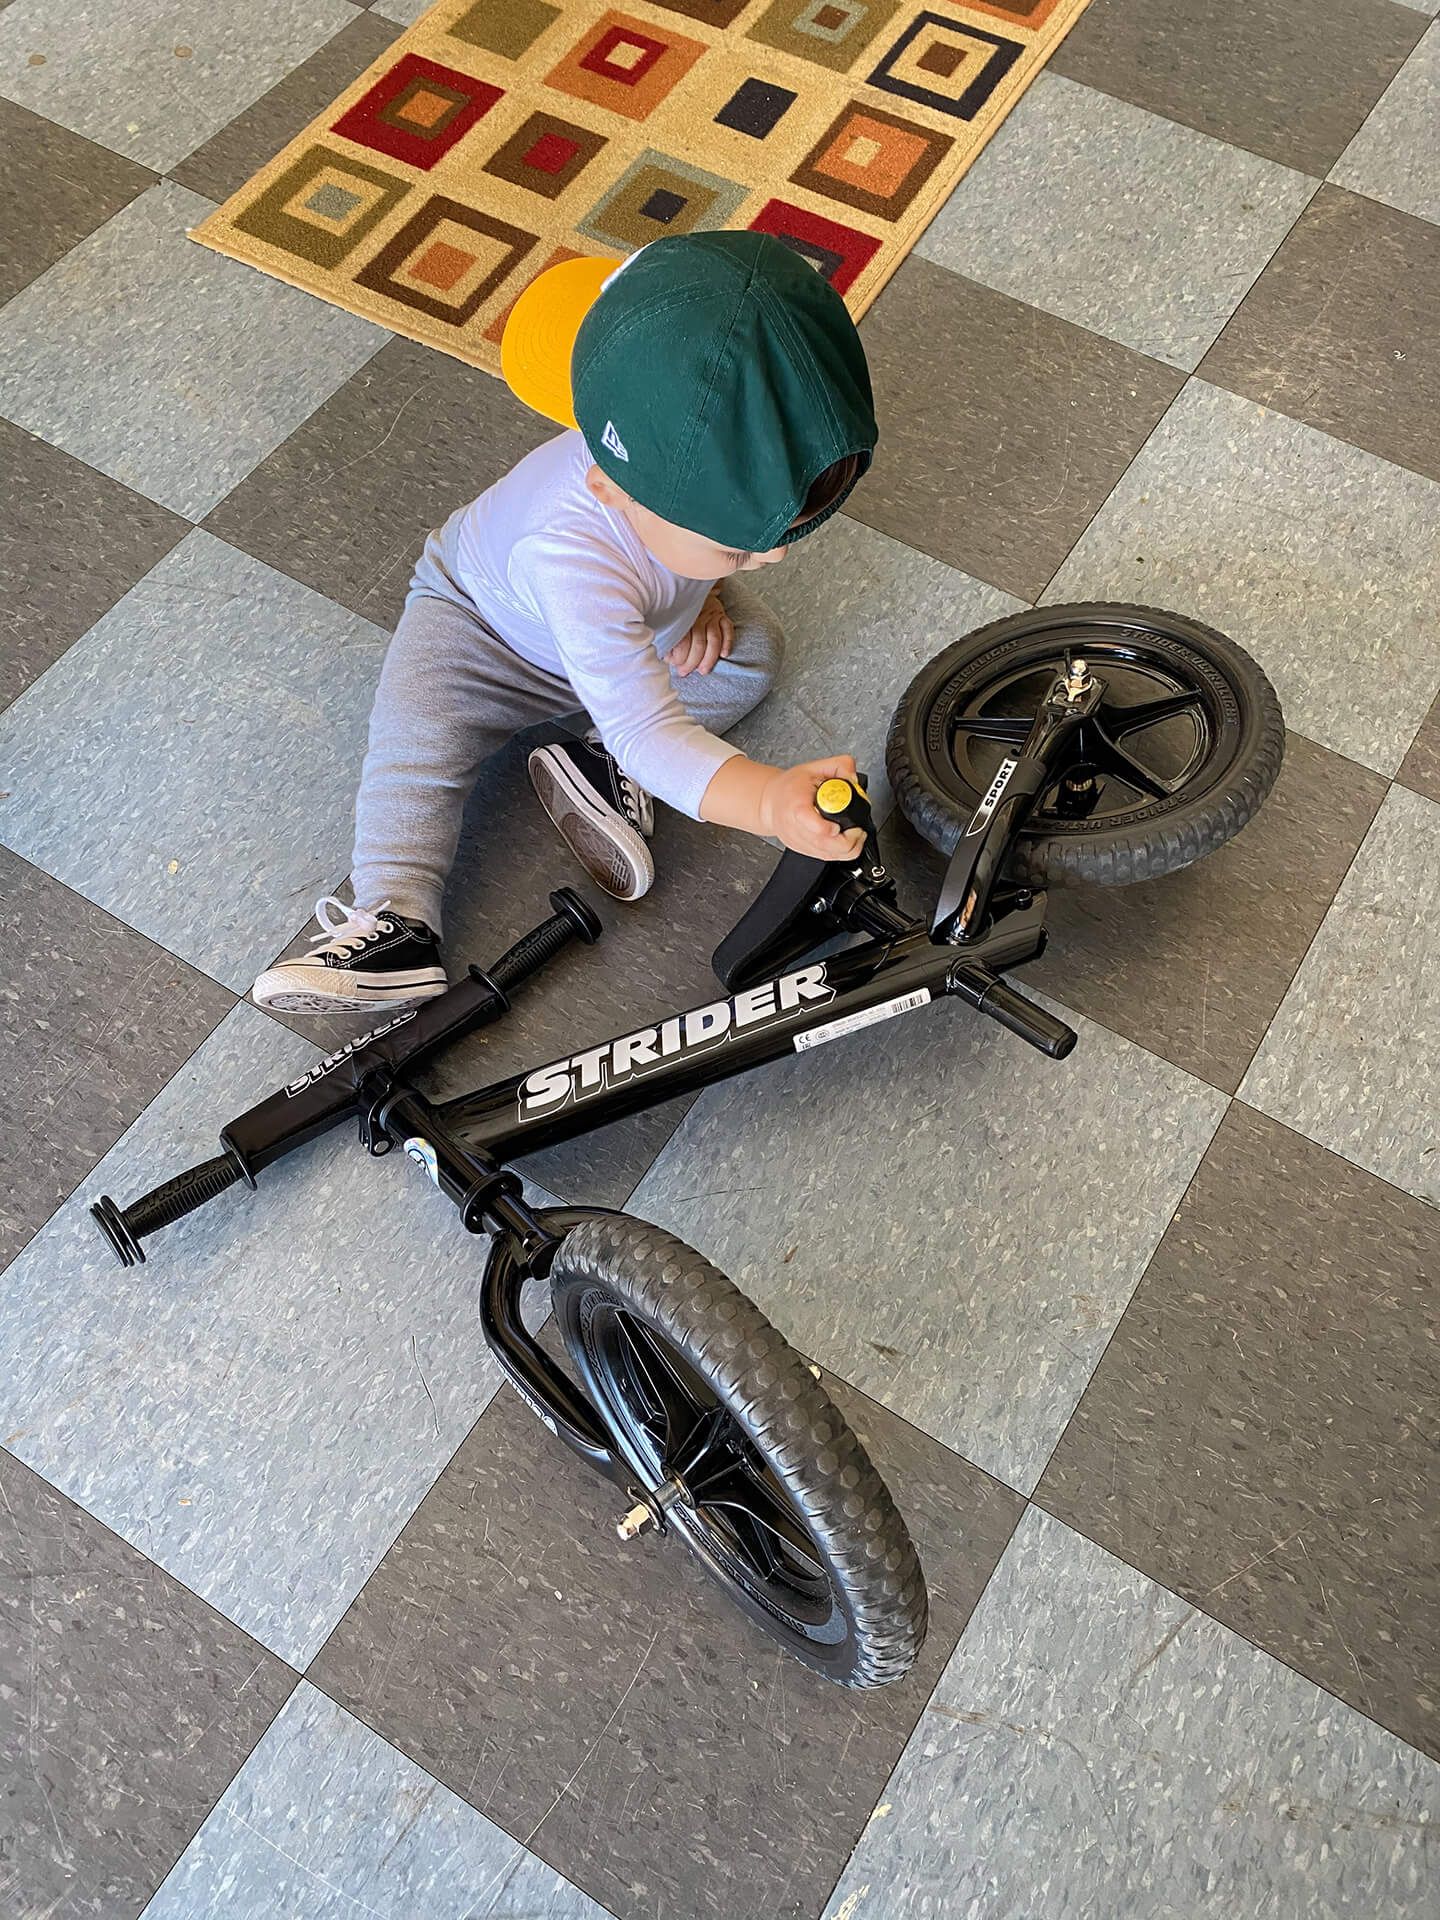 A child uses a screwdriver to "repair" a Strider Sport 12-inch balance bike